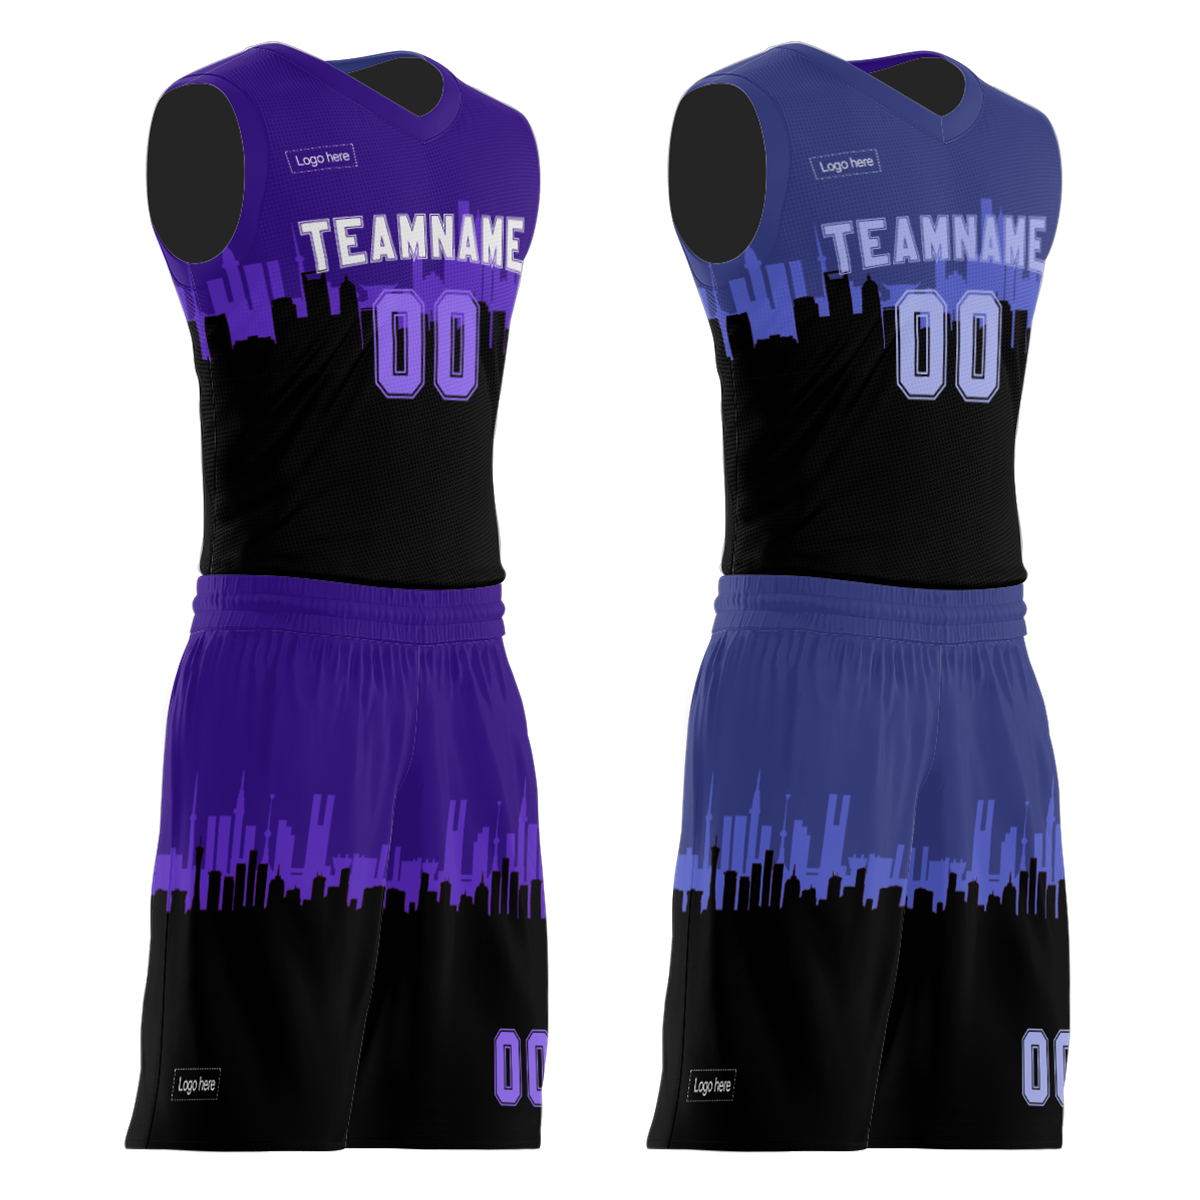 High Quality Unique Basketball Jersey Pattern Design Full Sublimation Digital Printing OEM Service Basketball Uniform